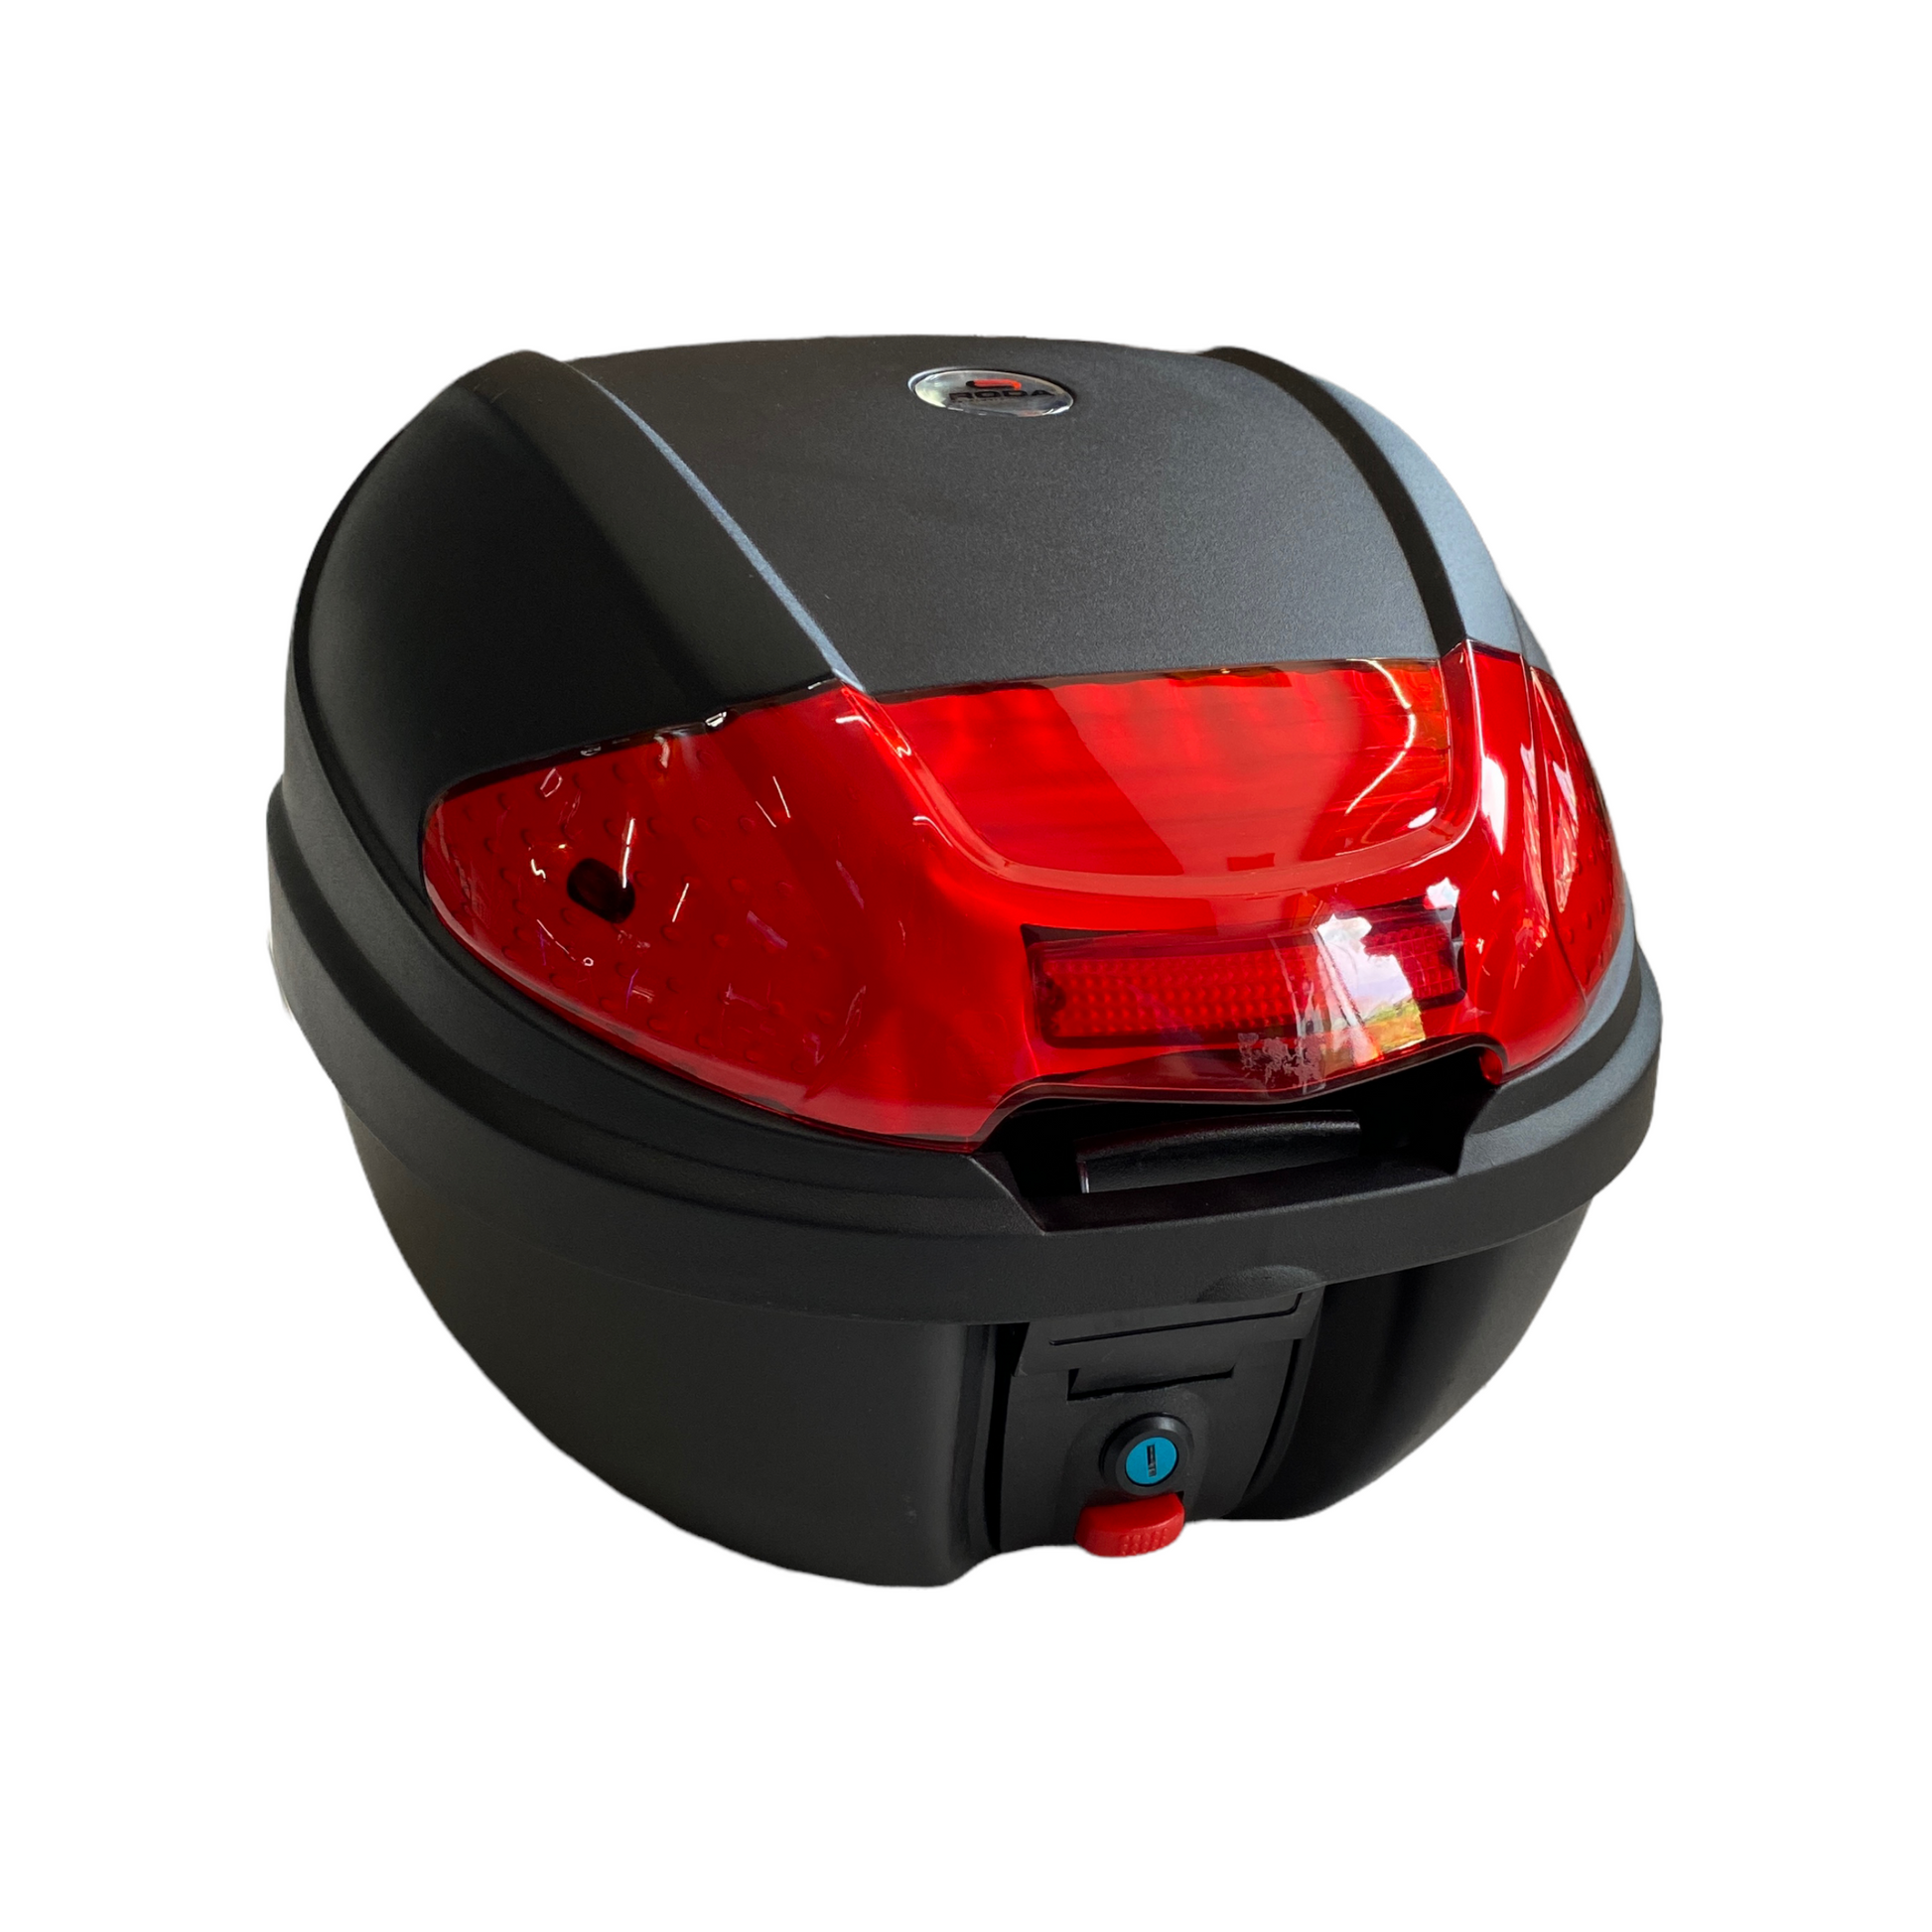 Maletero Moto Baul Caja Top Case Con Respaldo Reflejante 32l